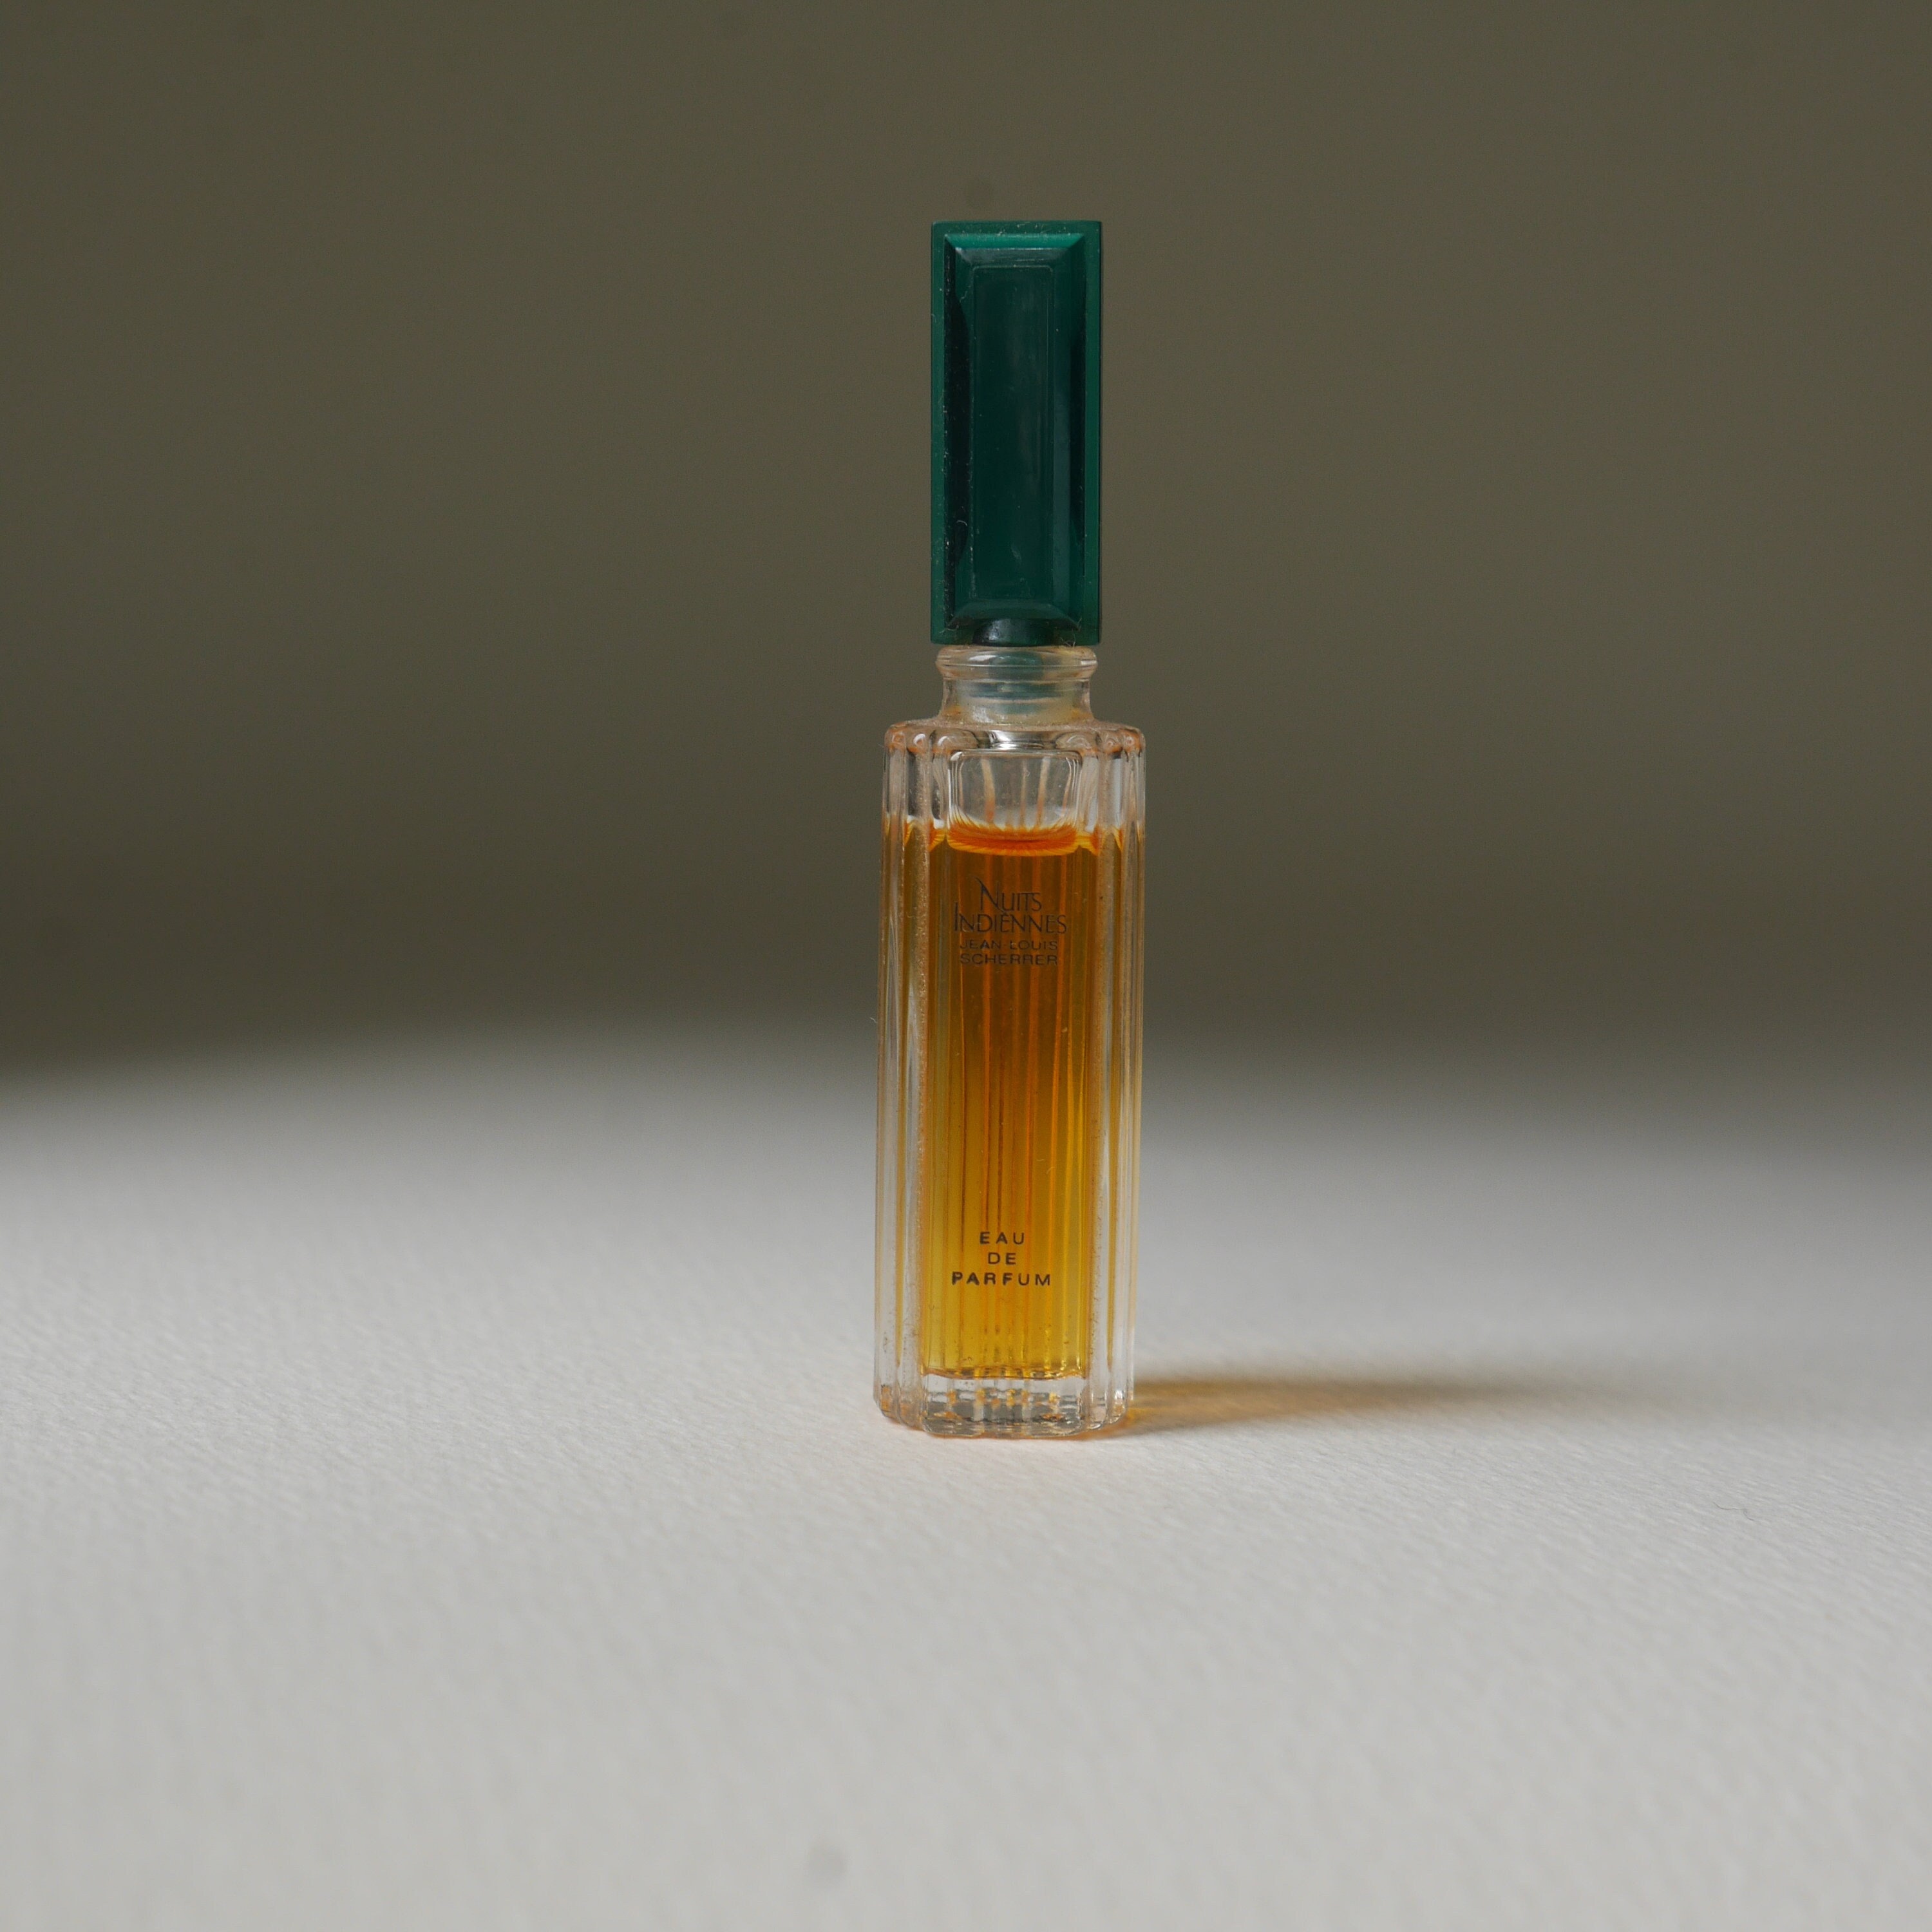 Immense Pour Femme Jean-Louis Scherrer perfume - a fragrance for